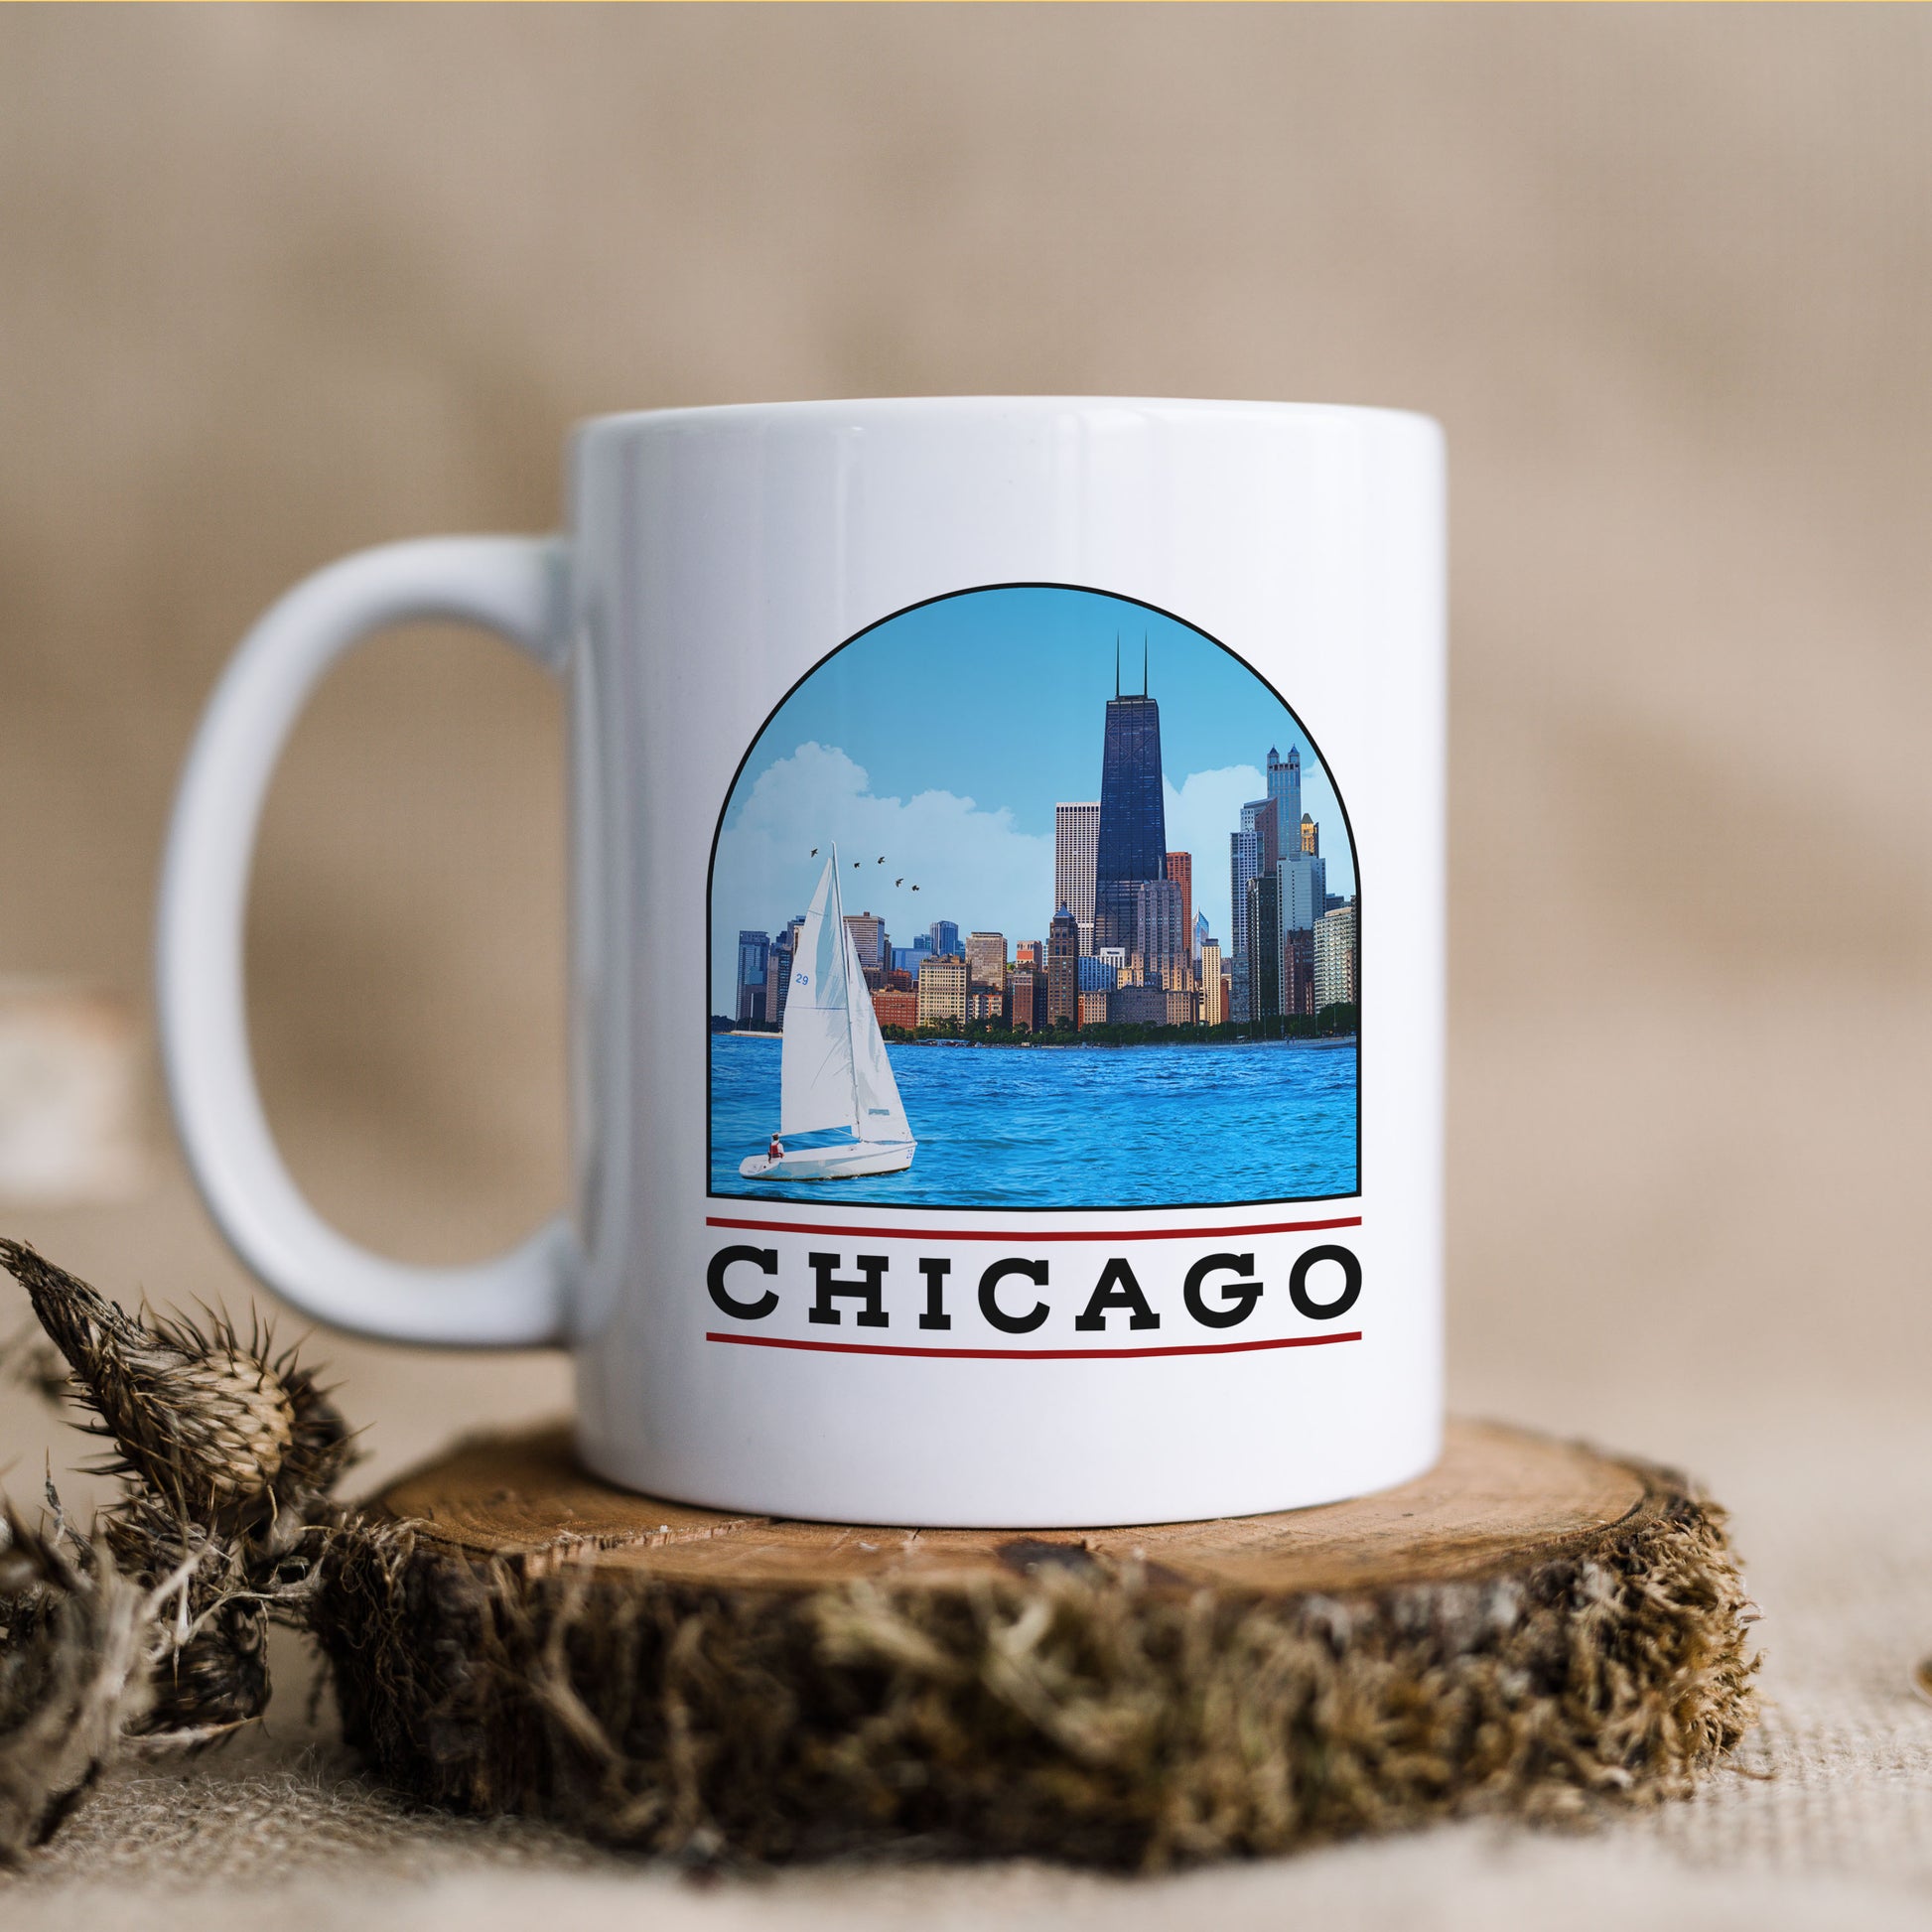 Chicago - Ceramic Mug - Vintaprints